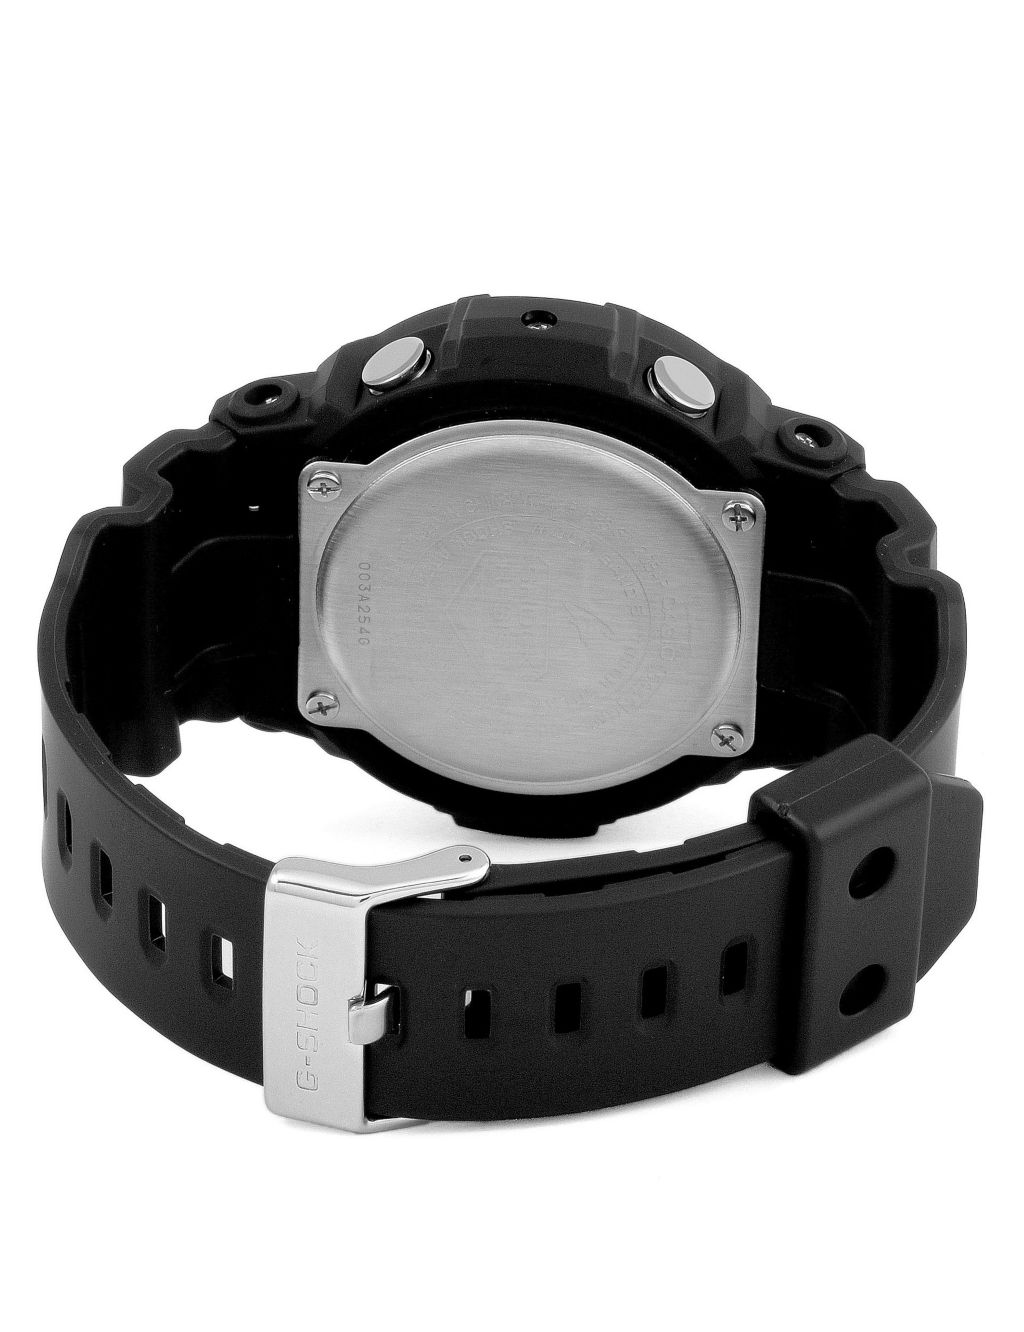 Casio G-Shock Waveceptor Resin Solar Watch image 3